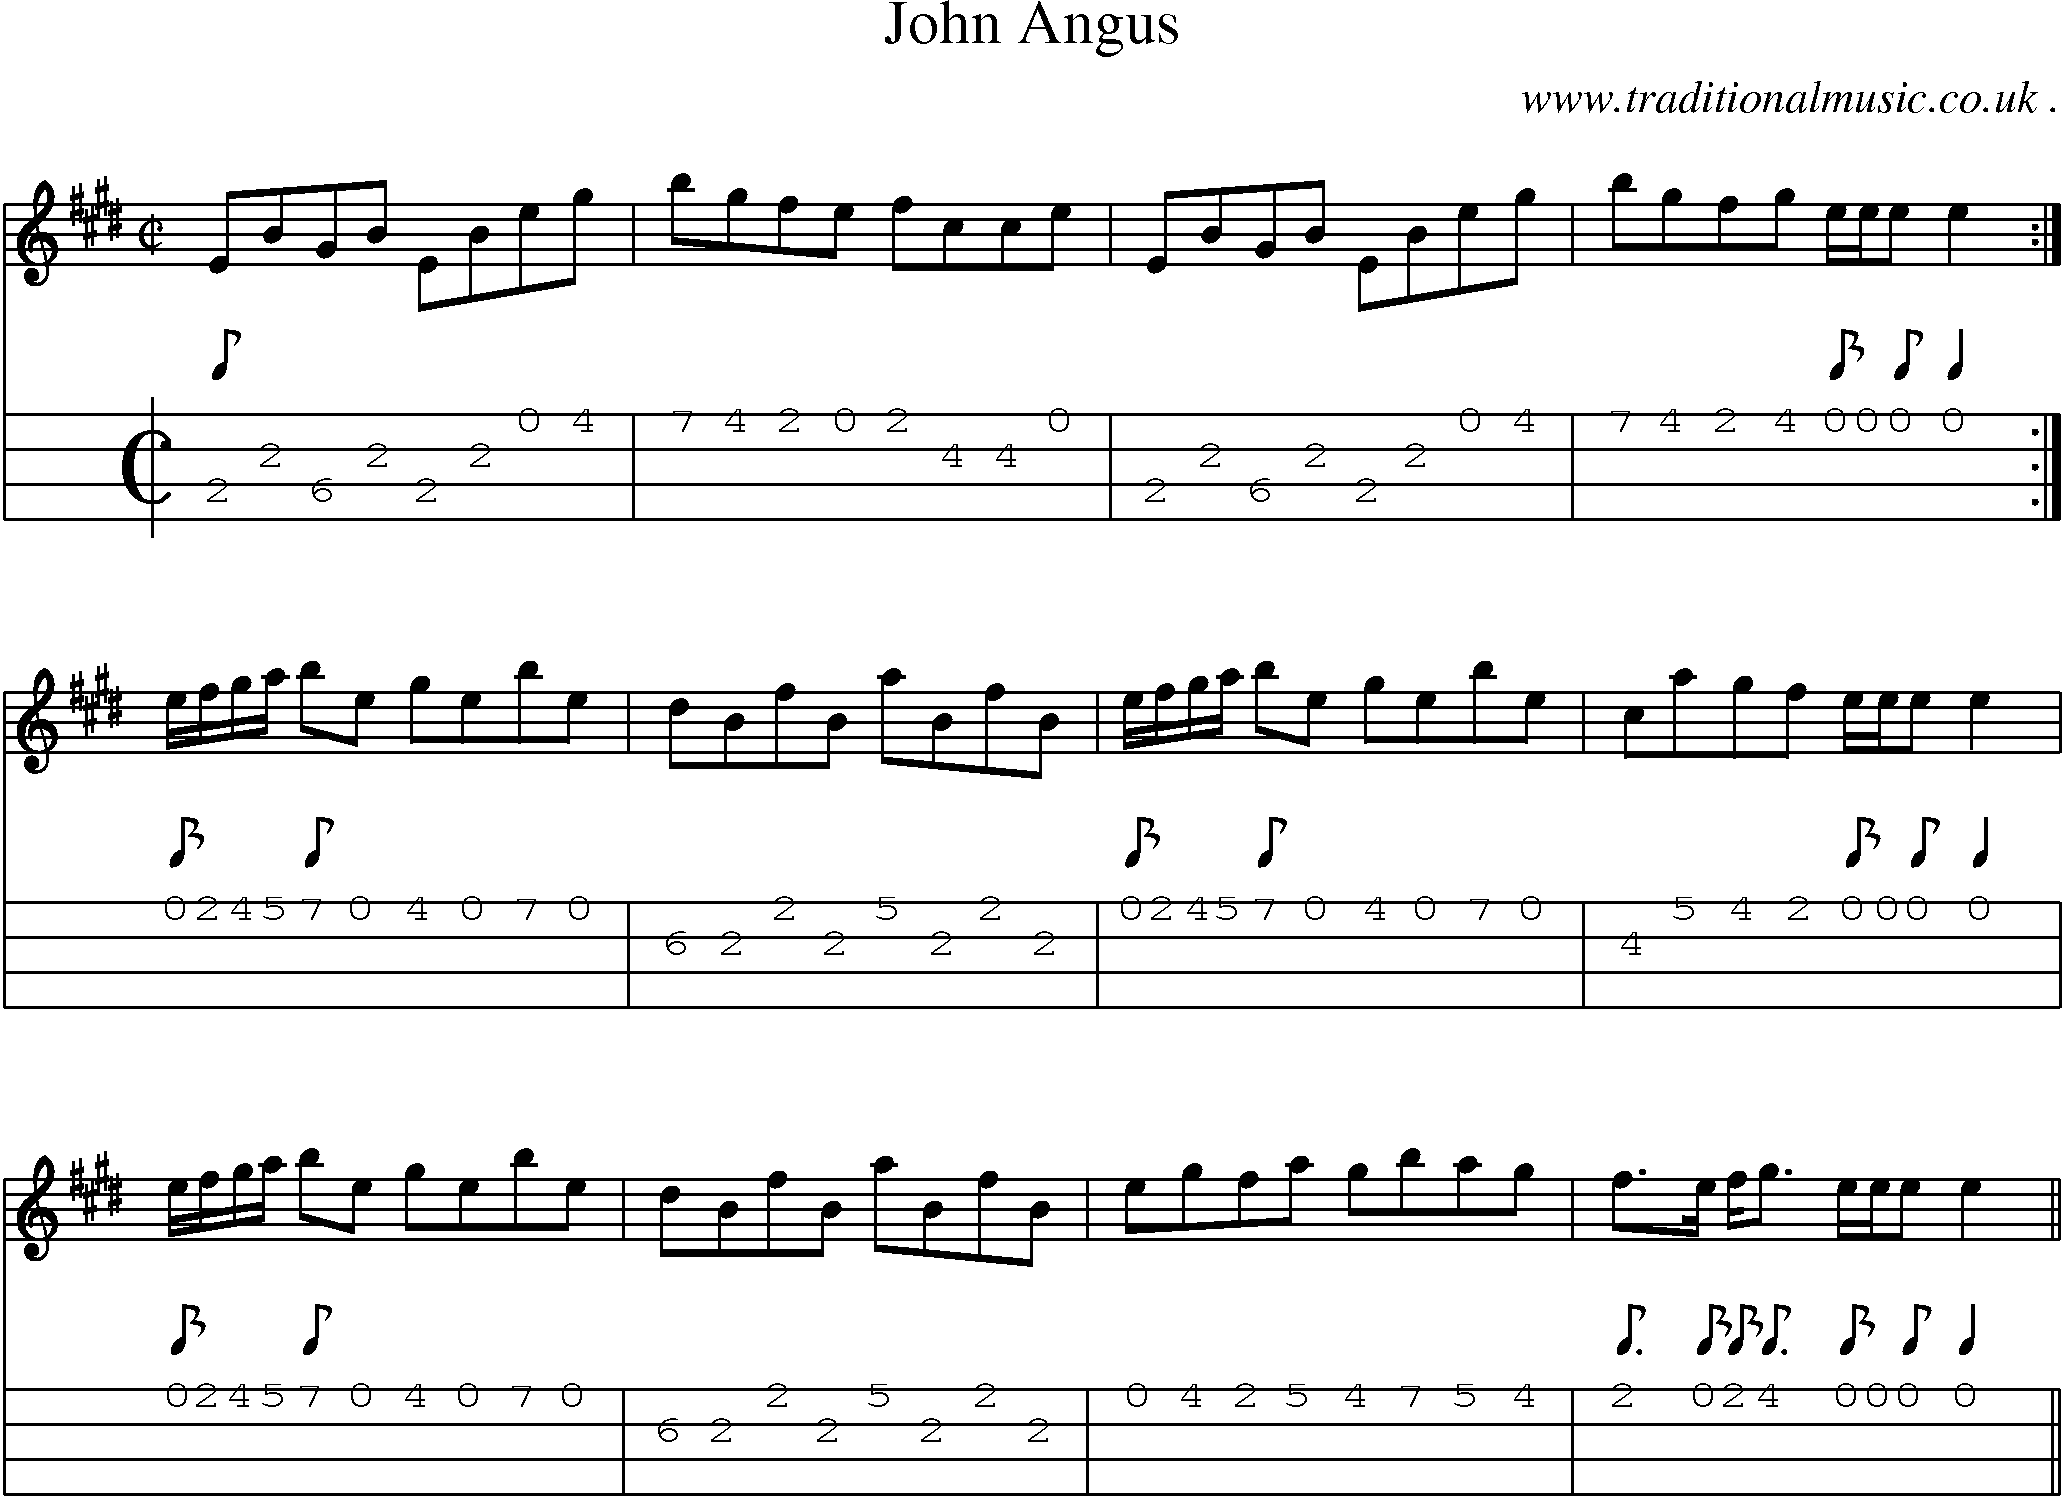 Sheet-music  score, Chords and Mandolin Tabs for John Angus